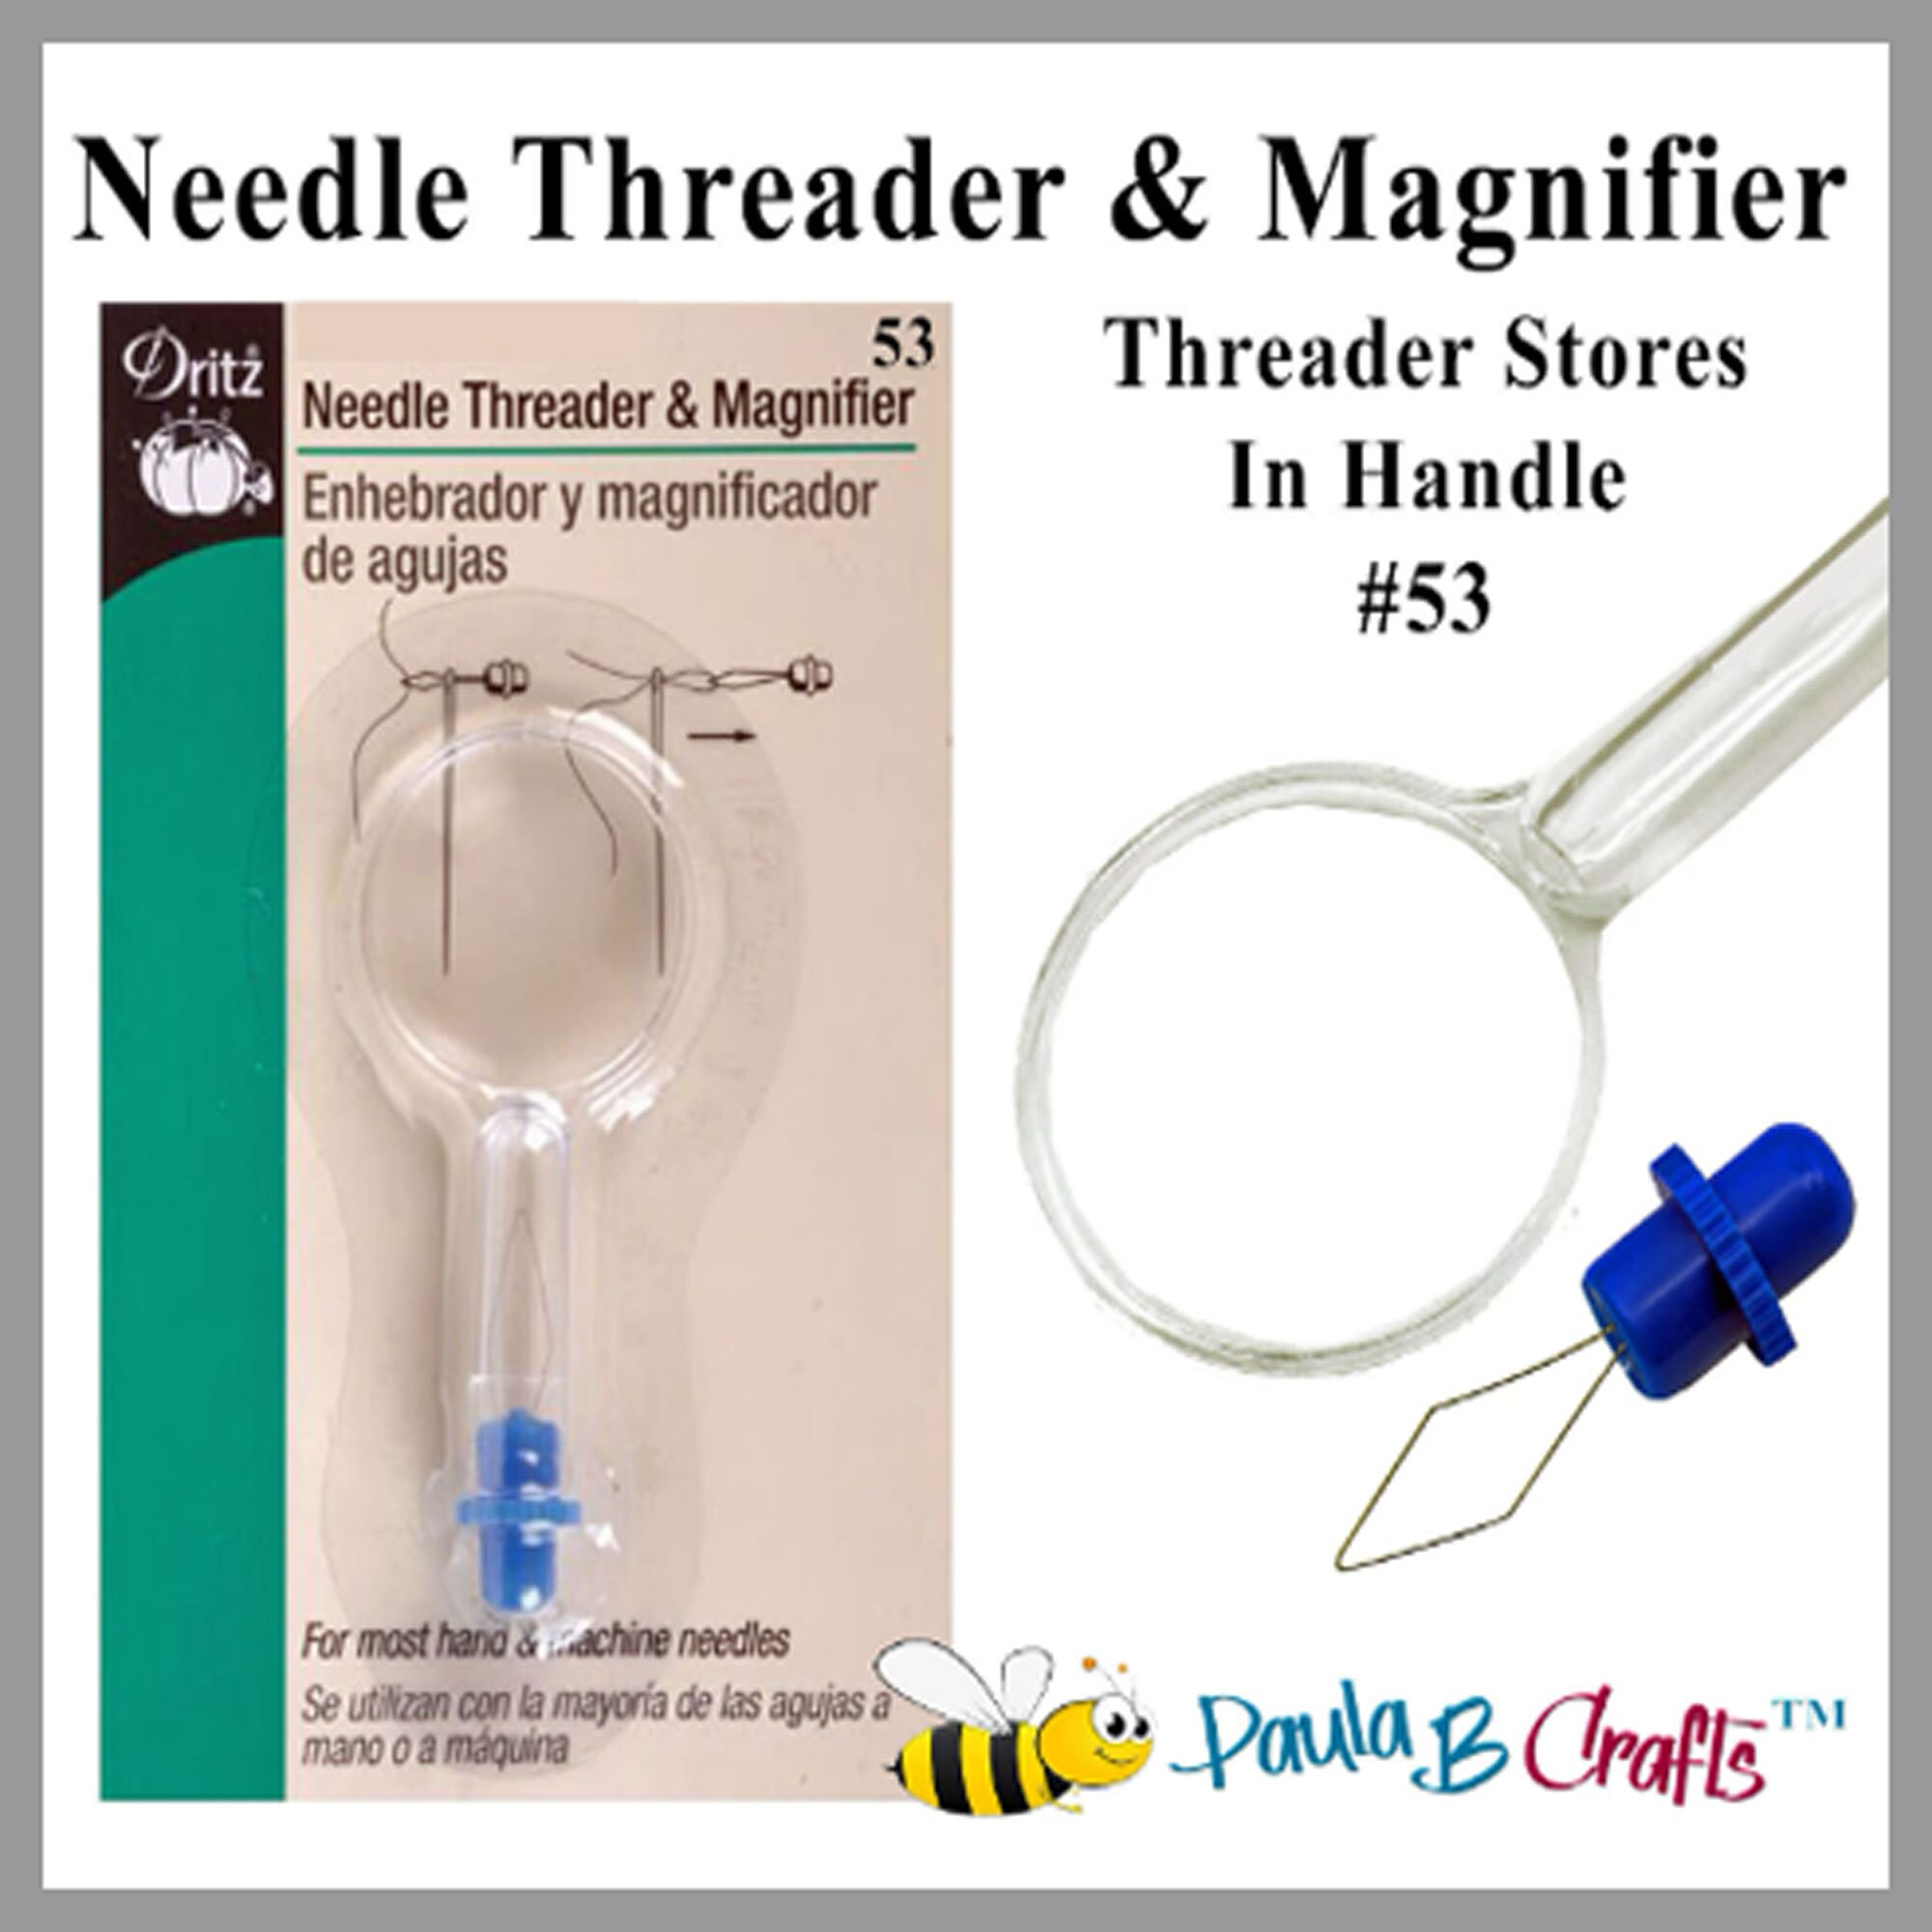 Dritz 3 Needle Threaders